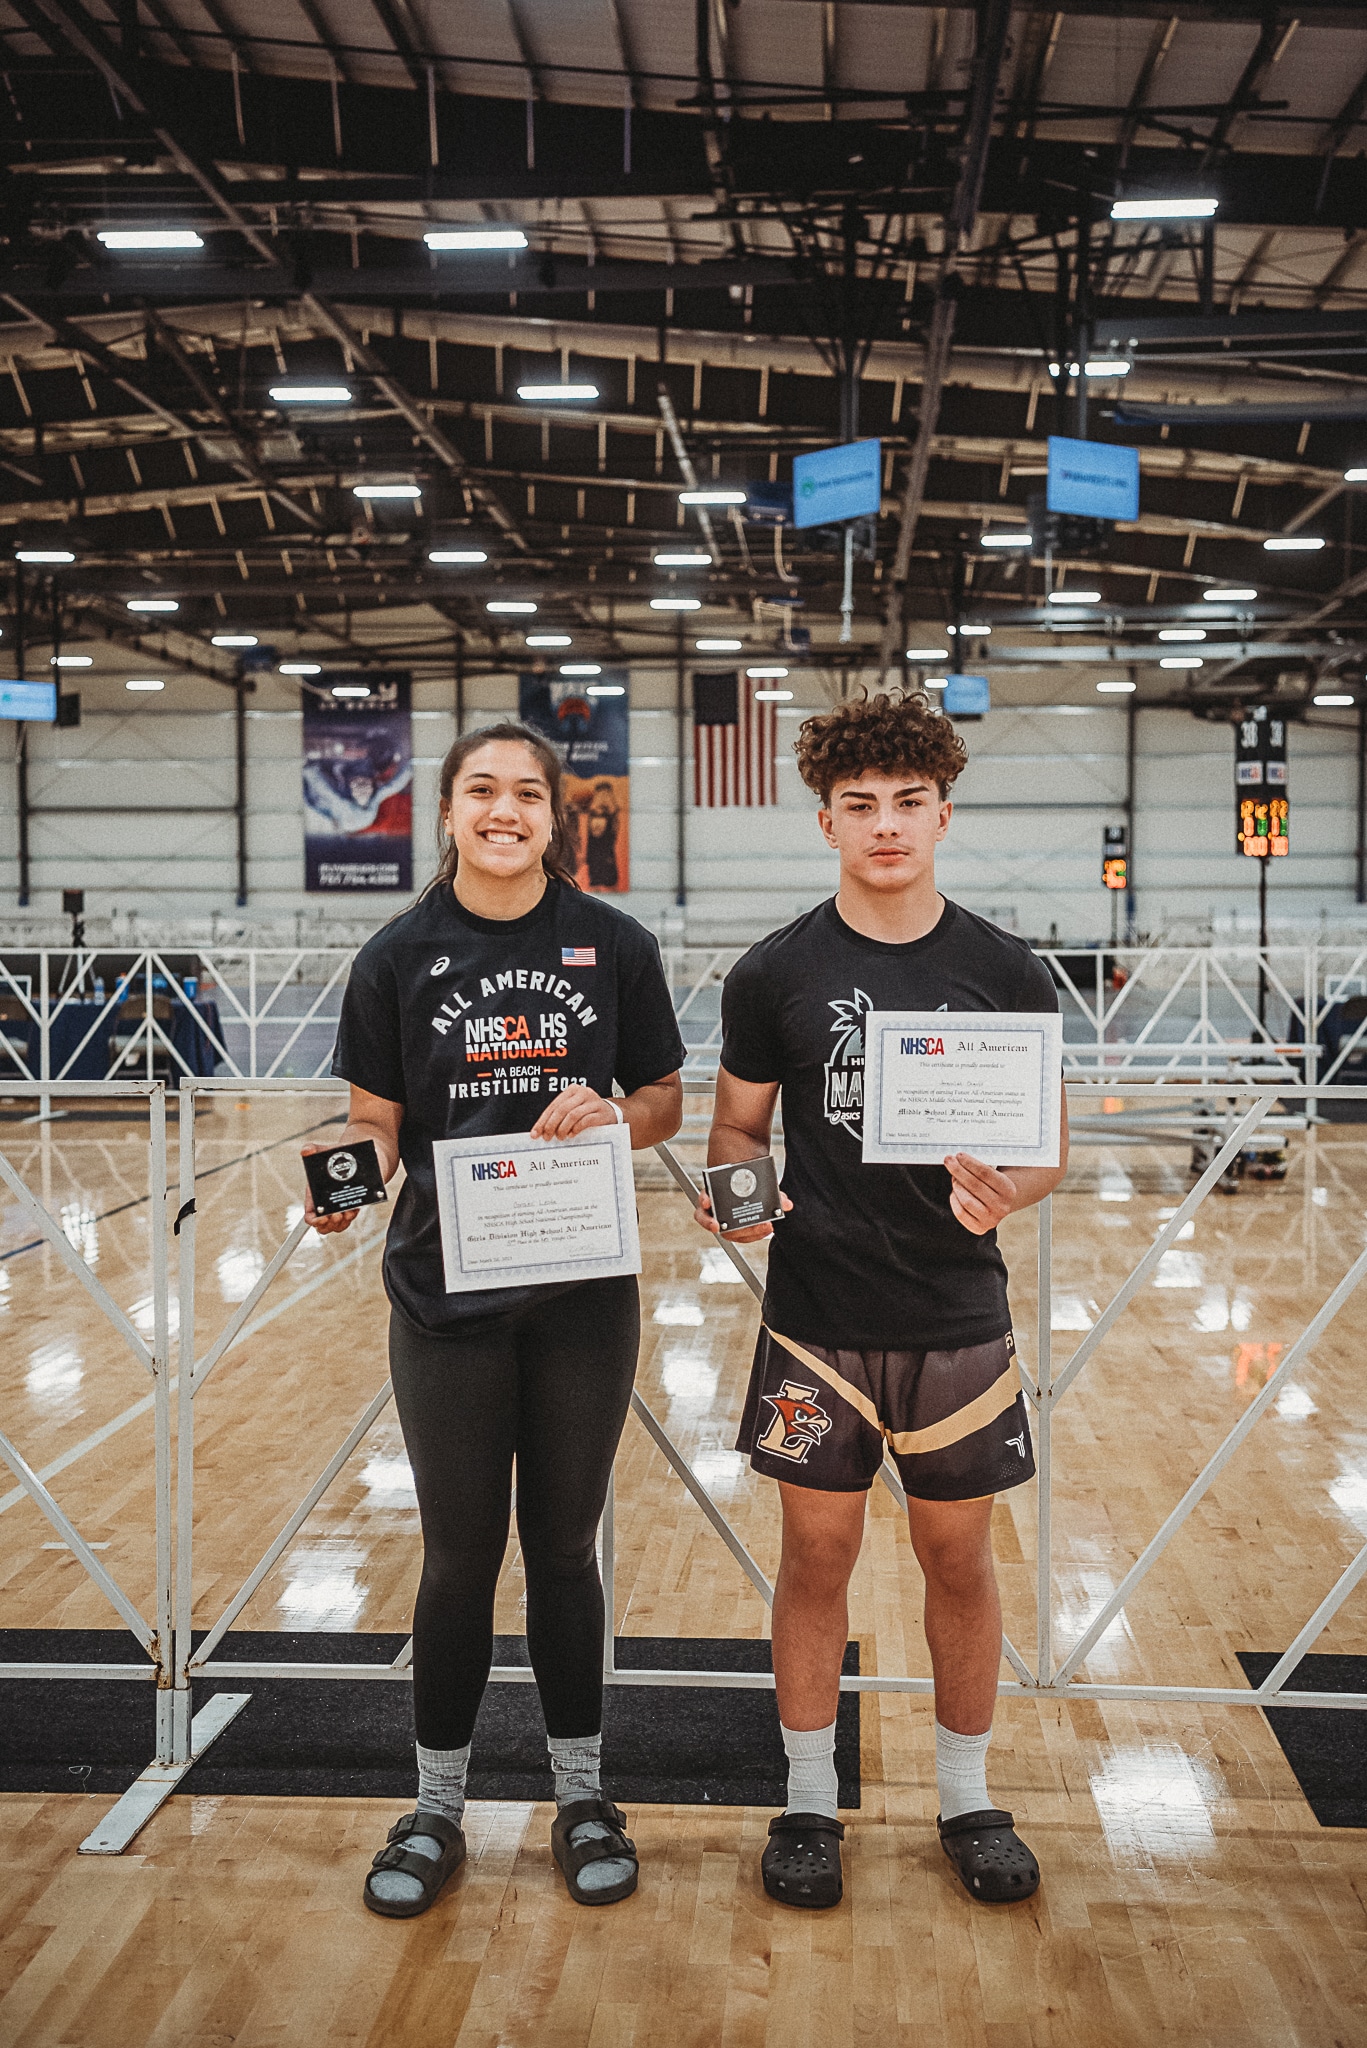 Grace Leota and Jeremiah Chavis earn All-American status at the 34th Annual High School National Tournament in Virginia Beach, VA.